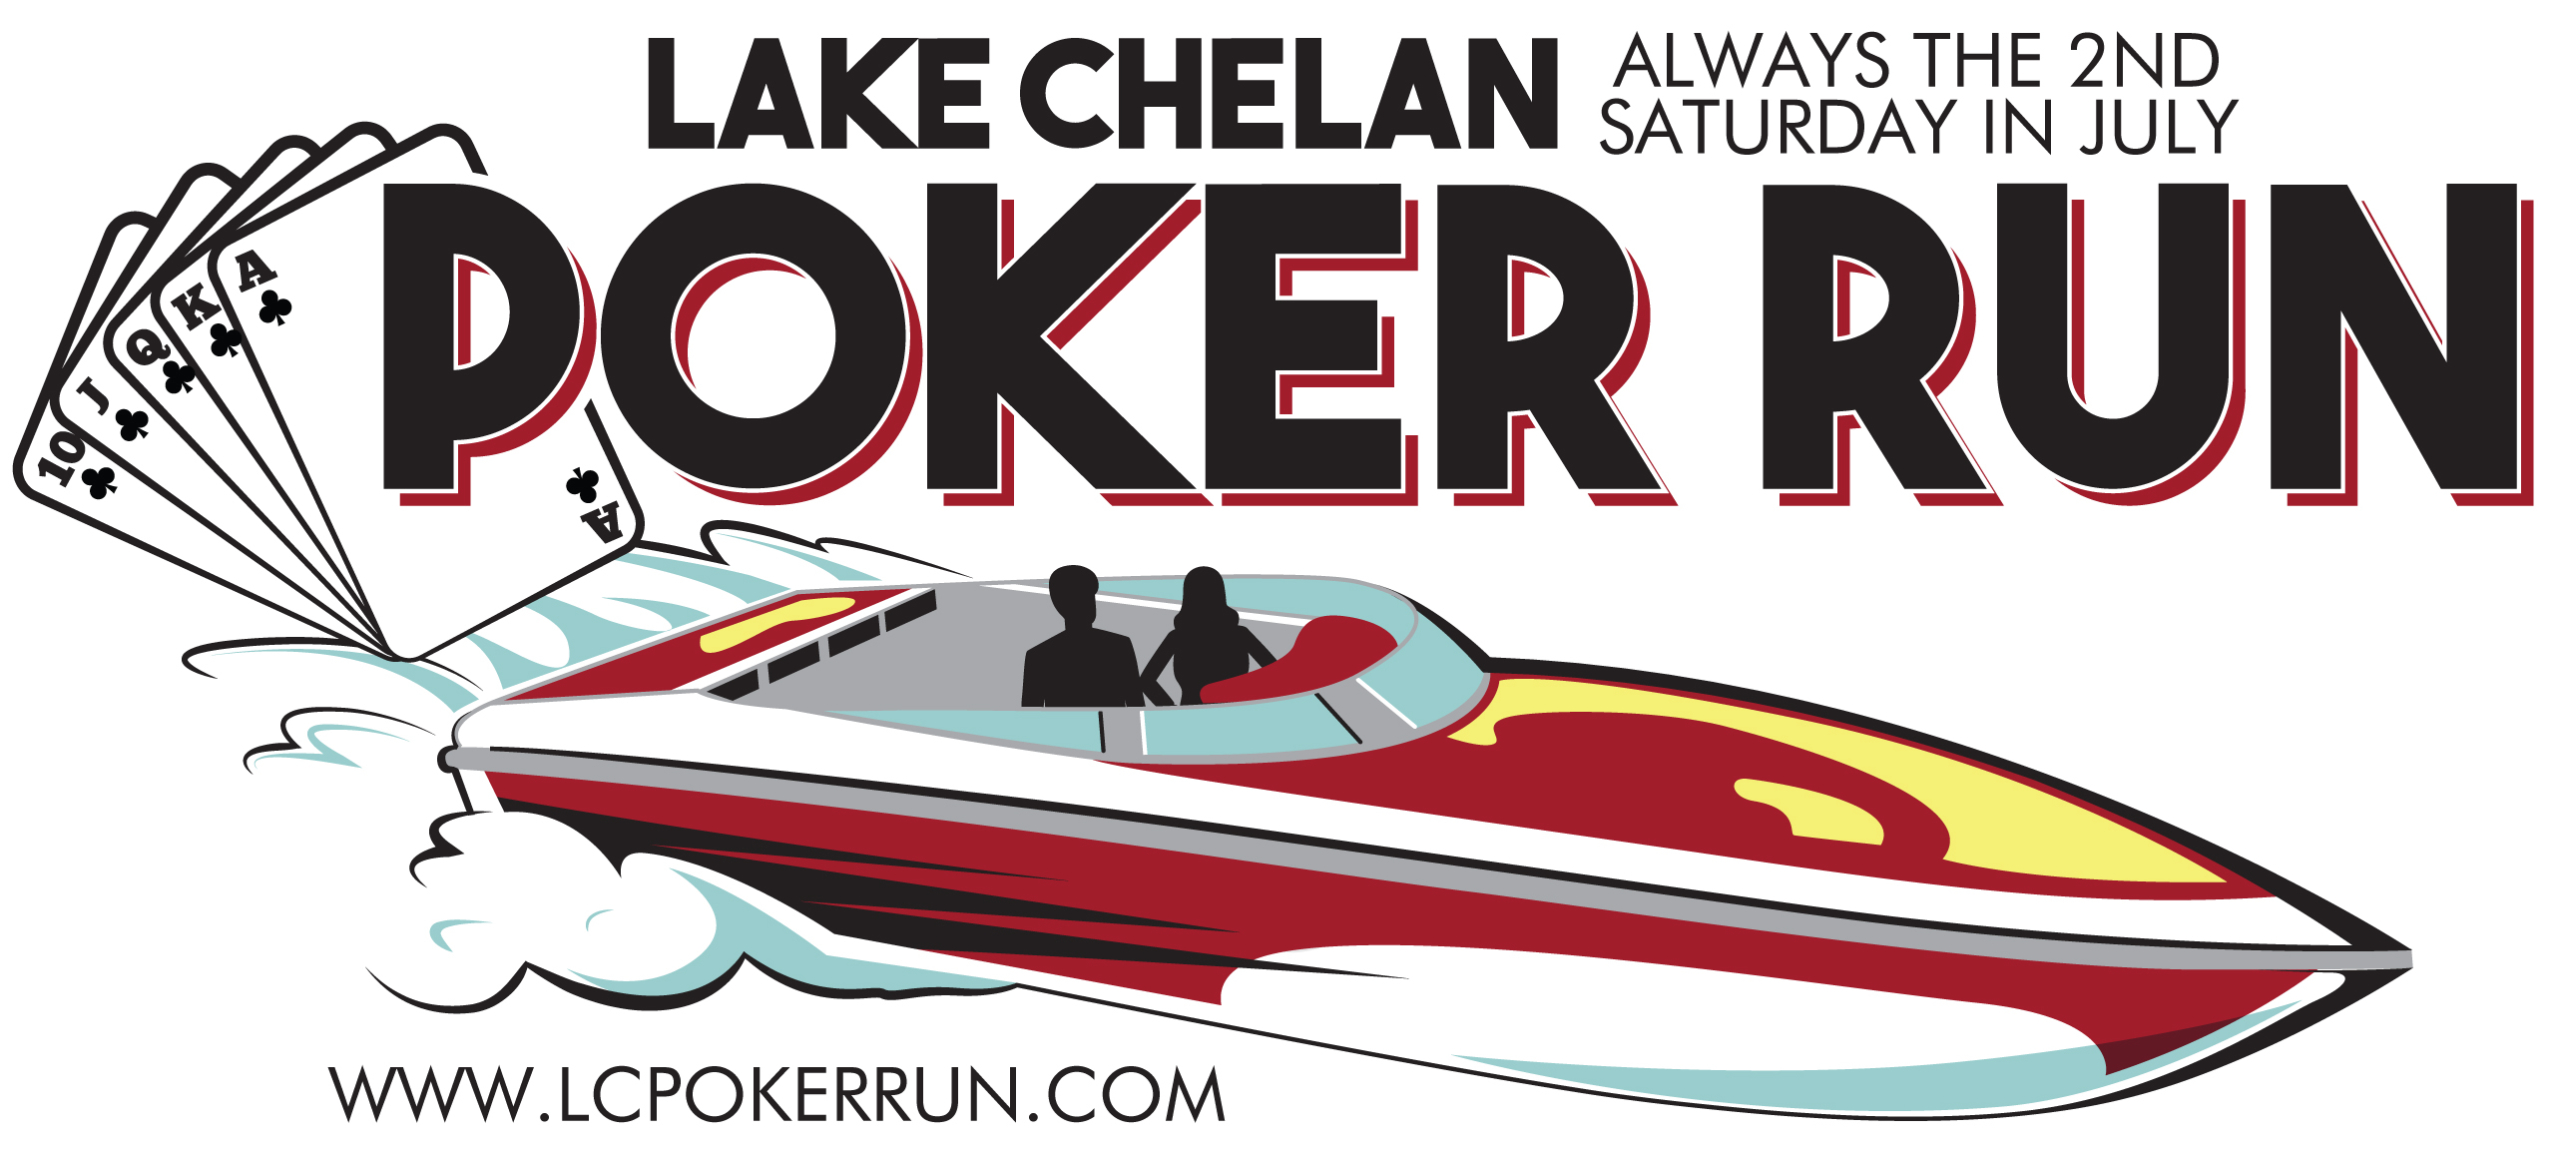 Lake Chelan Boating Club Poker Run Update Lake Chelan Chamber of Commerce